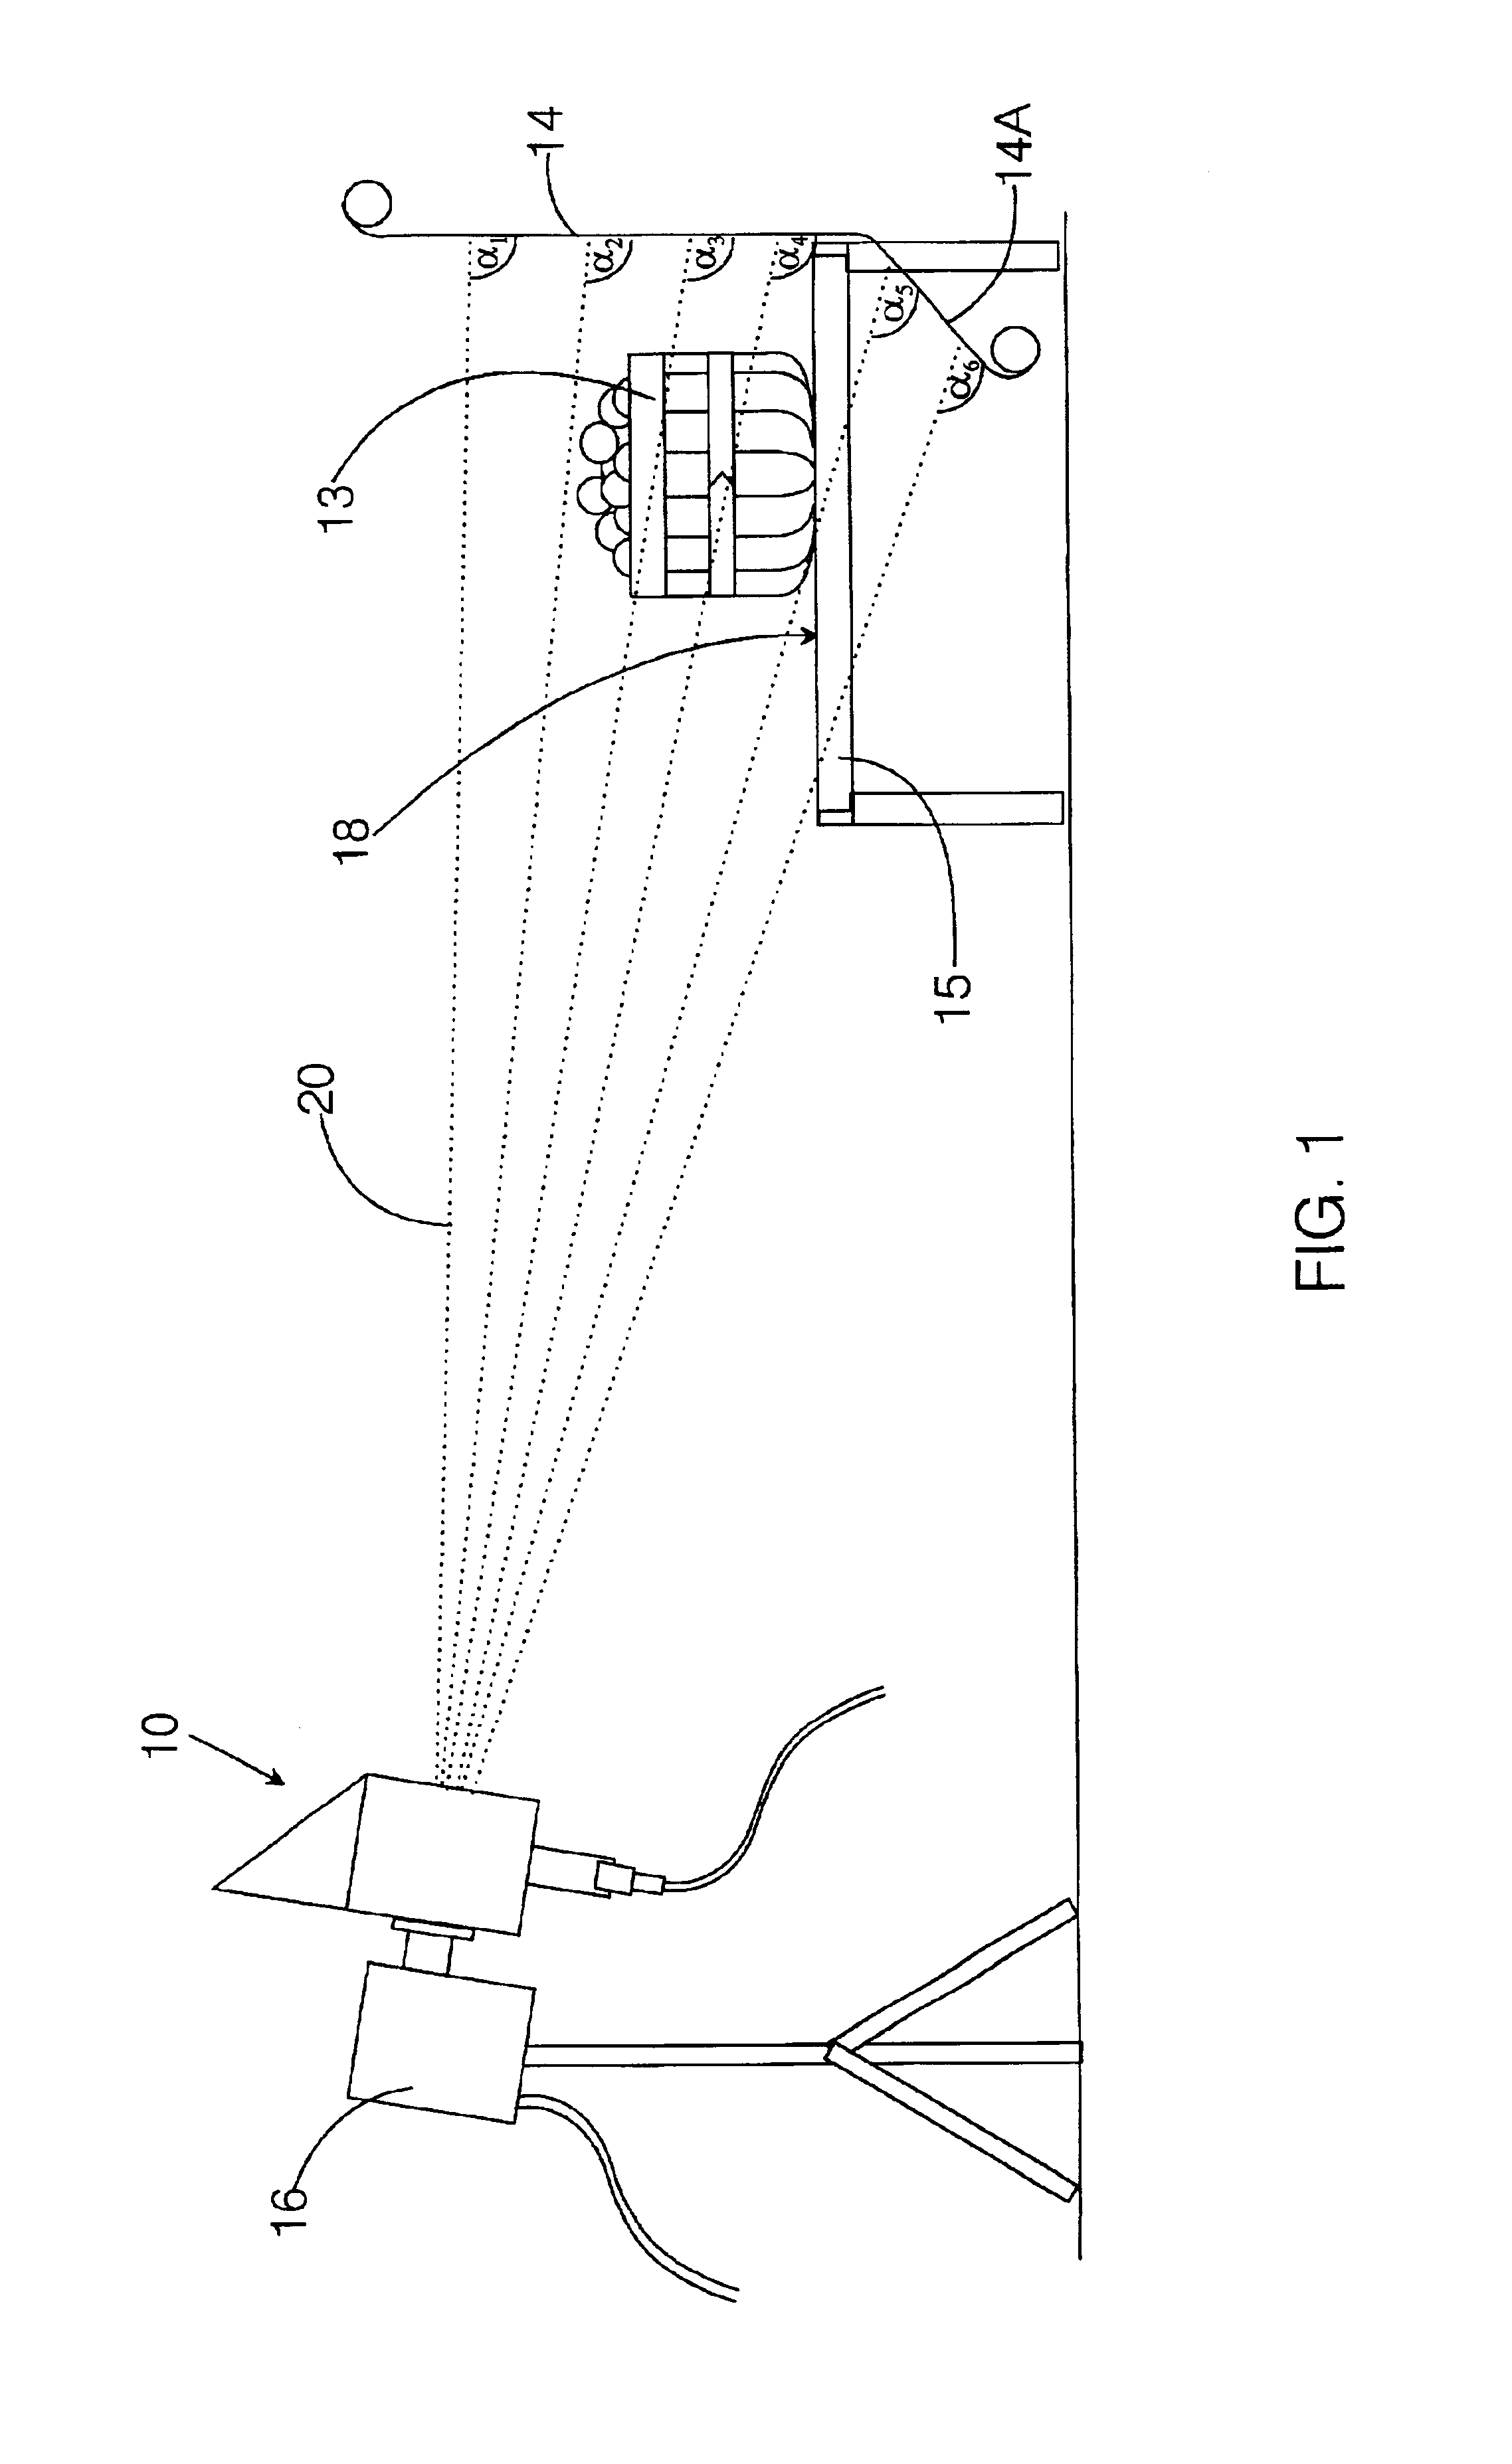 Silhouetting apparatus and method